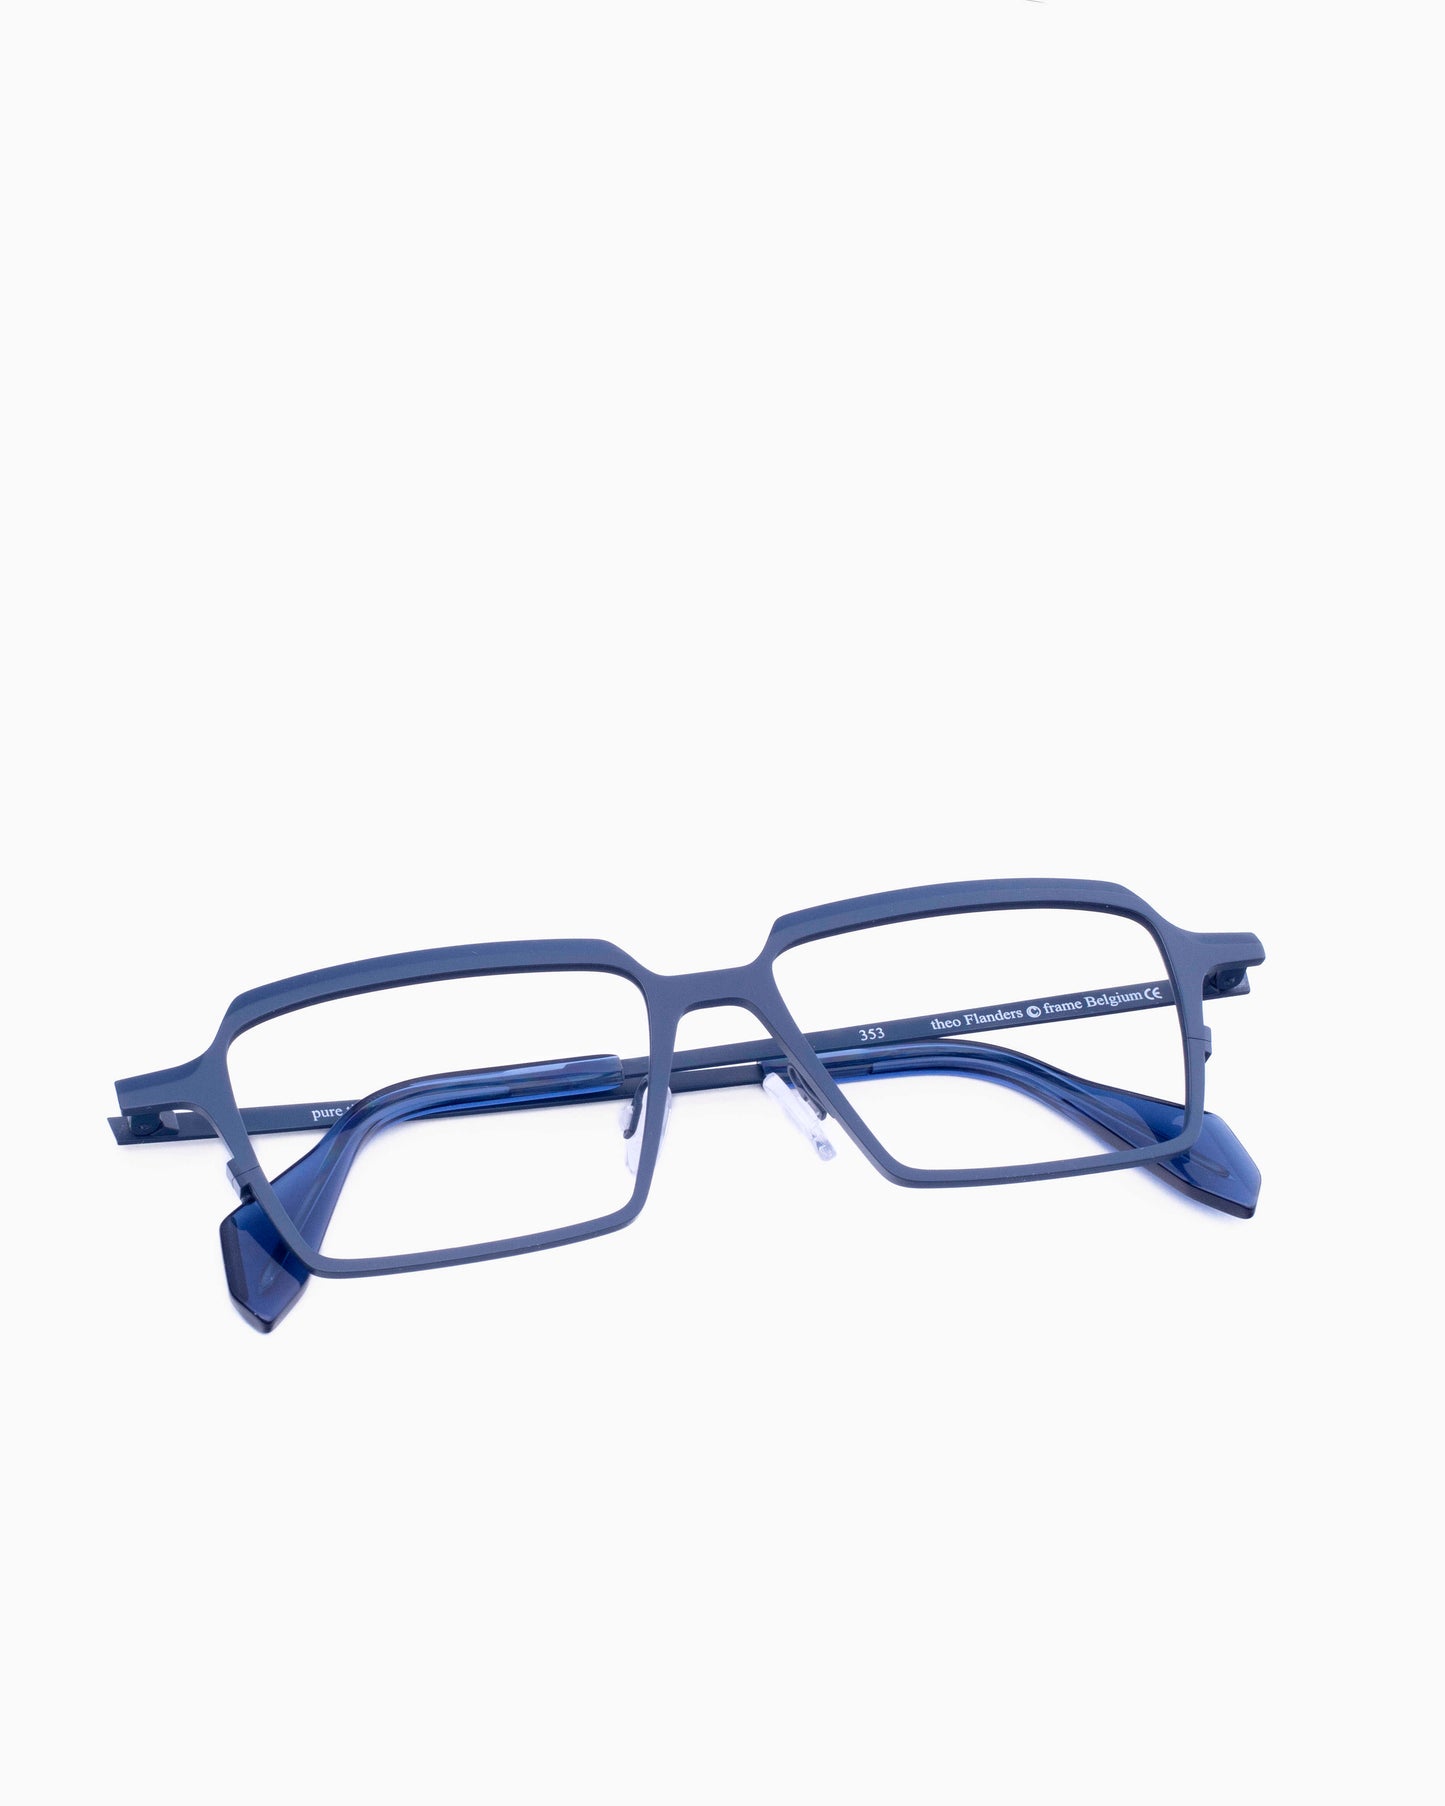 Theo - Flanders - 353 | glasses bar